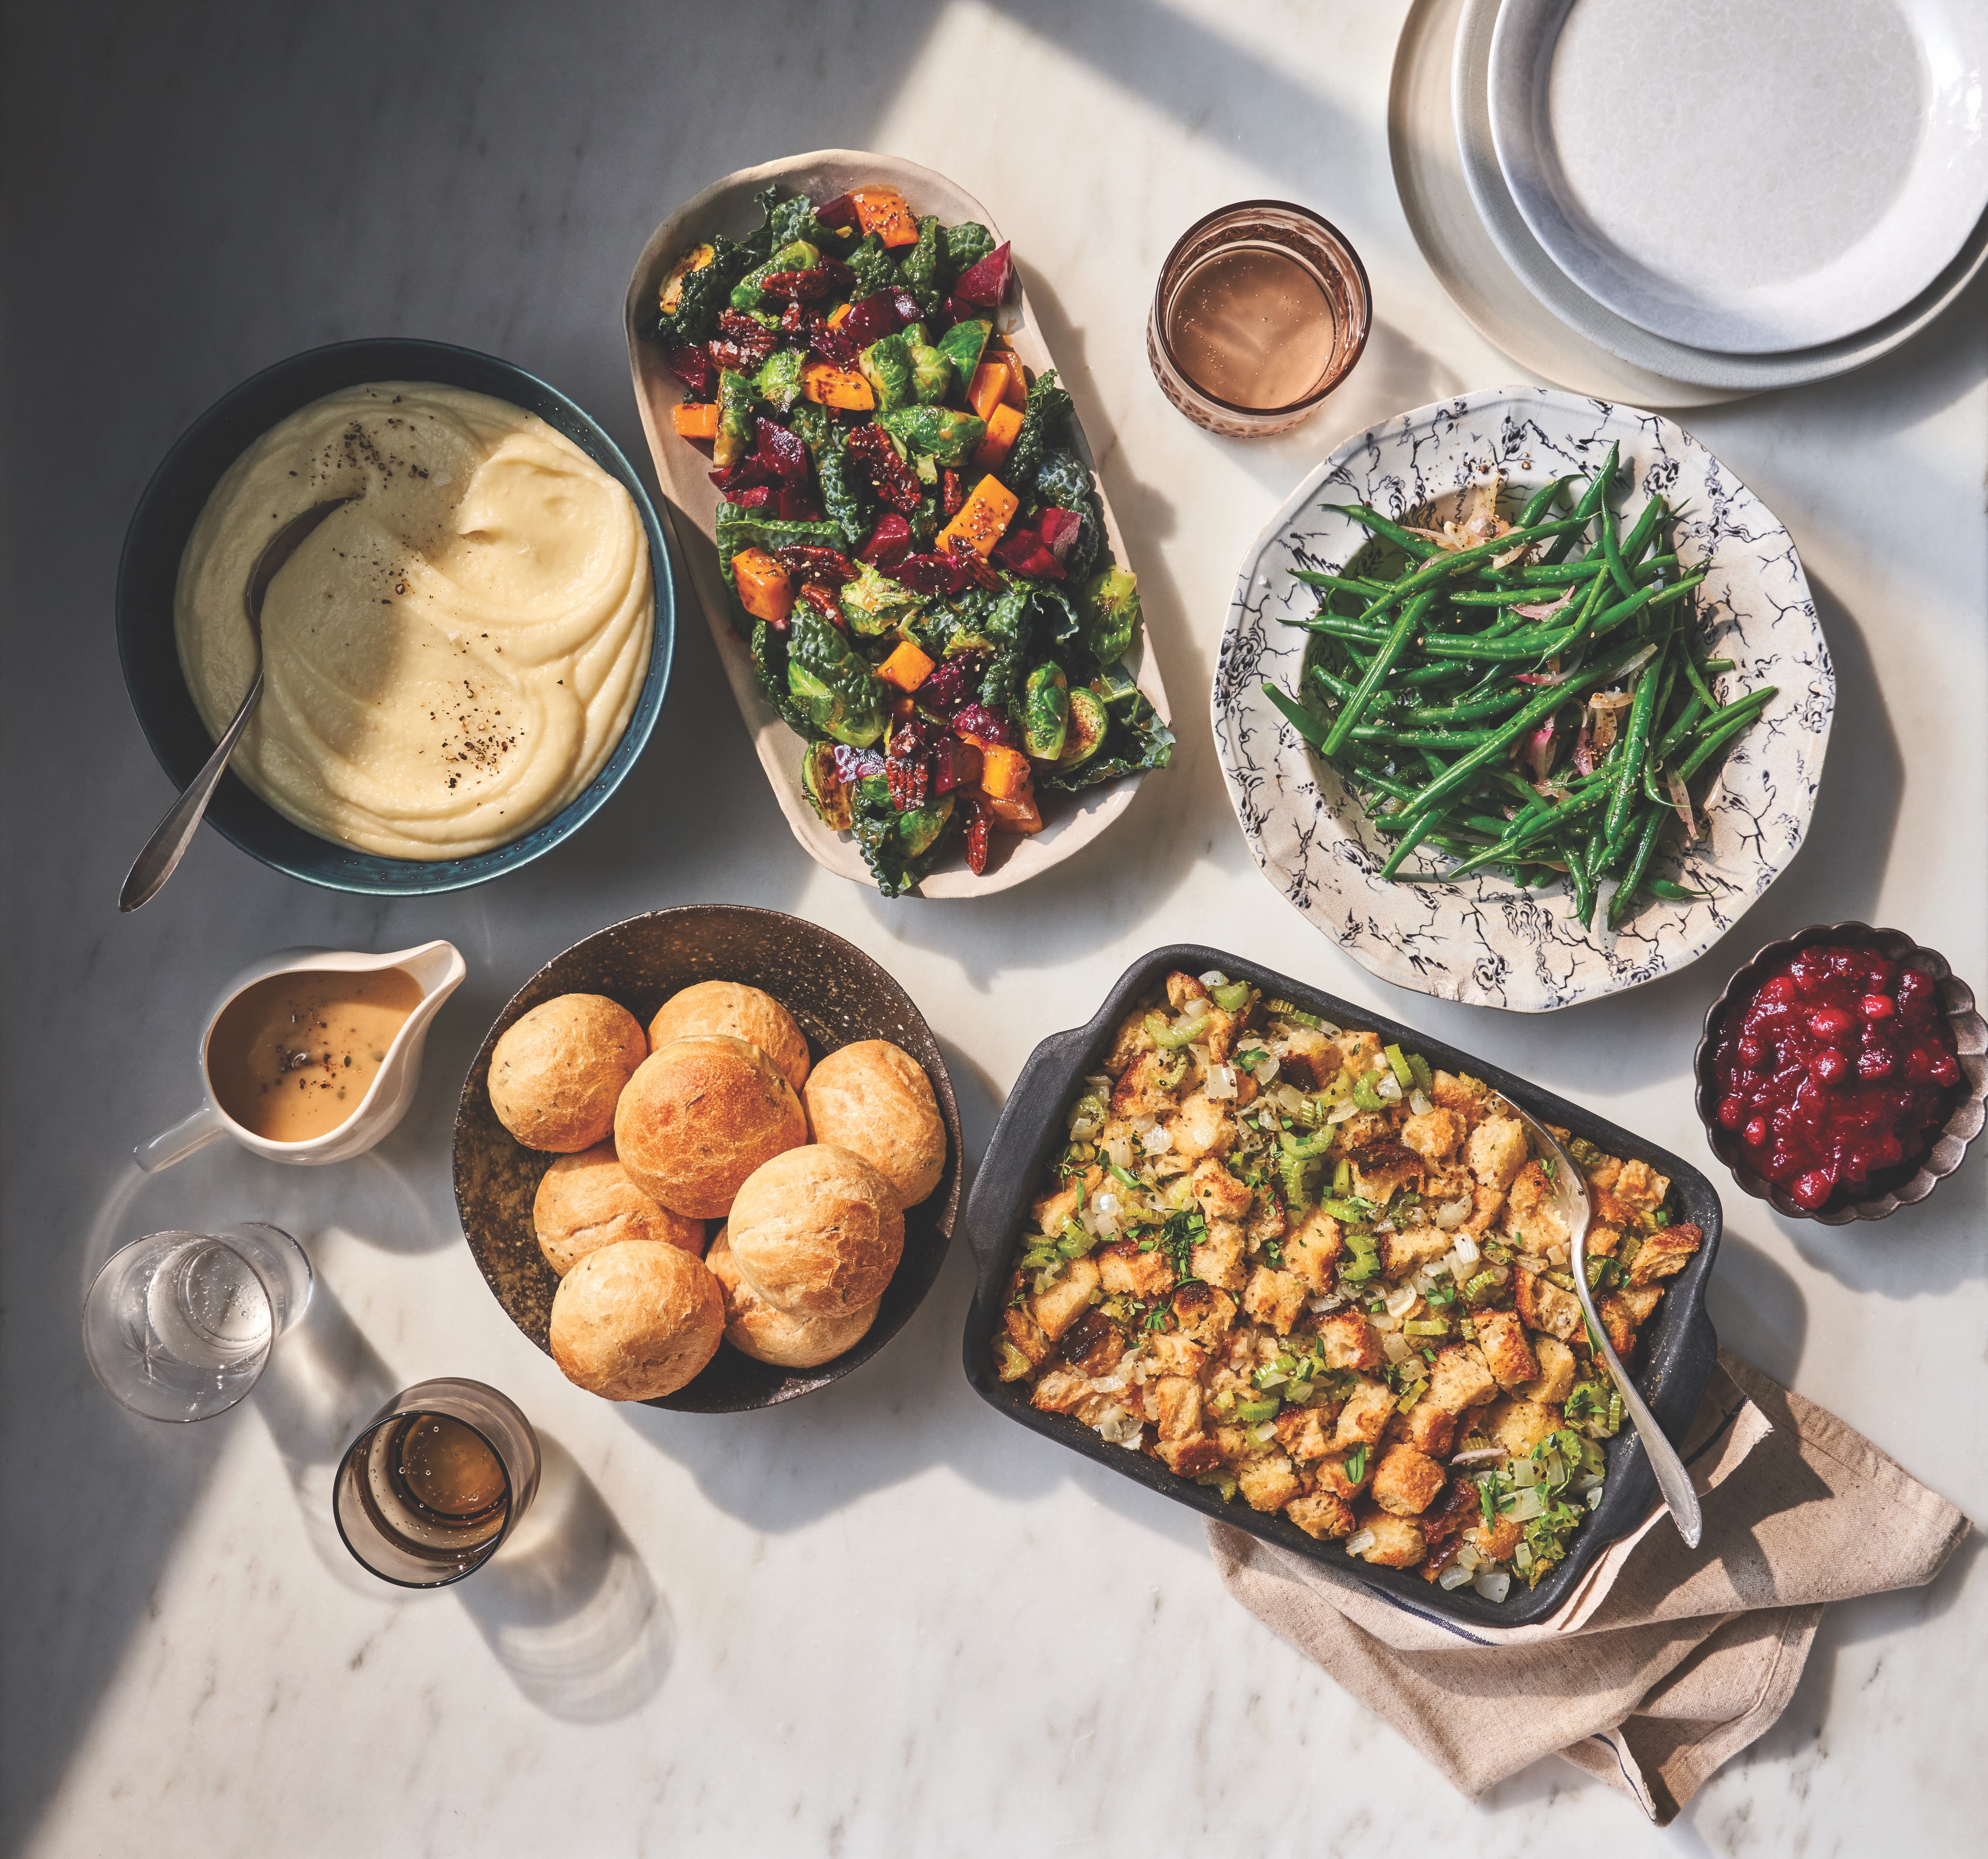 Whole Foods Has Vegan Stuffed Turkey Roasts for Thanksgiving